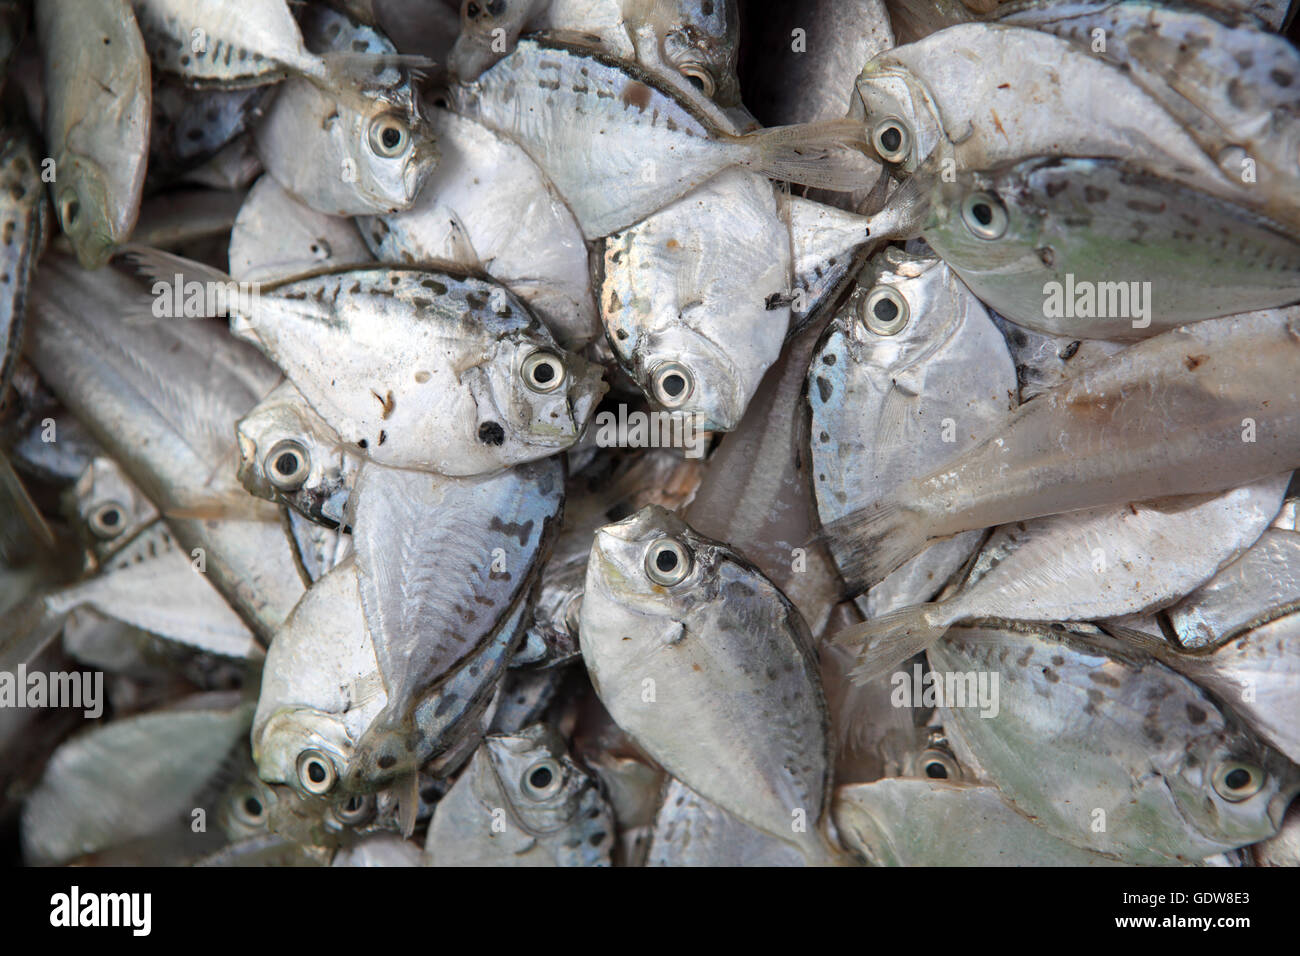 small sea fishes for sale in local market Stock Photo